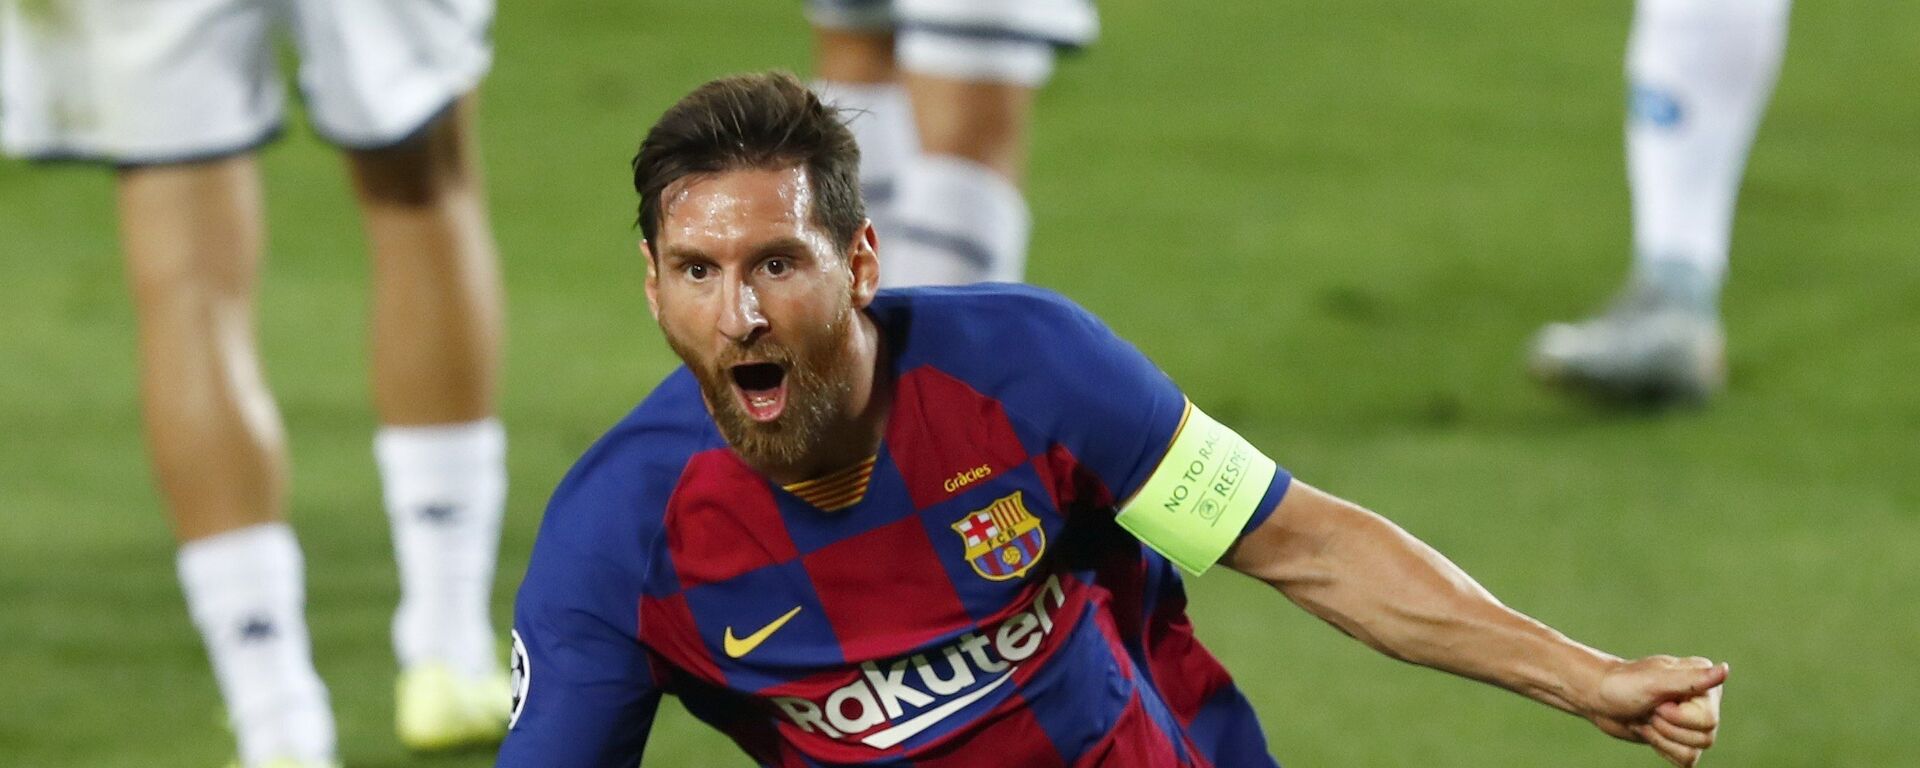 Leo Messi, futbolista argentino - Sputnik Mundo, 1920, 09.02.2021